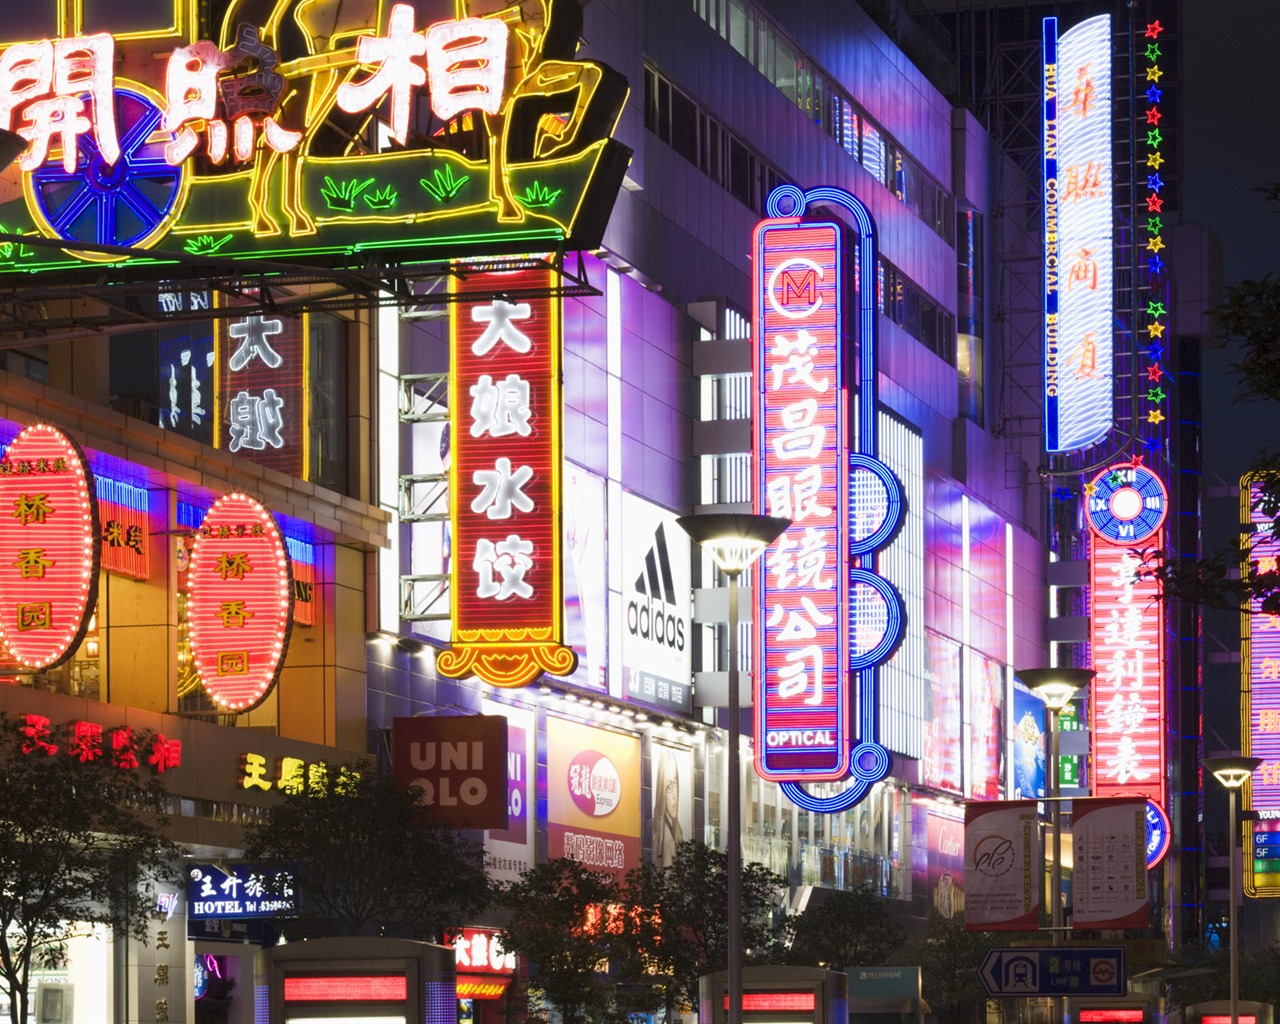 Vistazo de fondos de pantalla urbanas de China #14 - 1280x1024